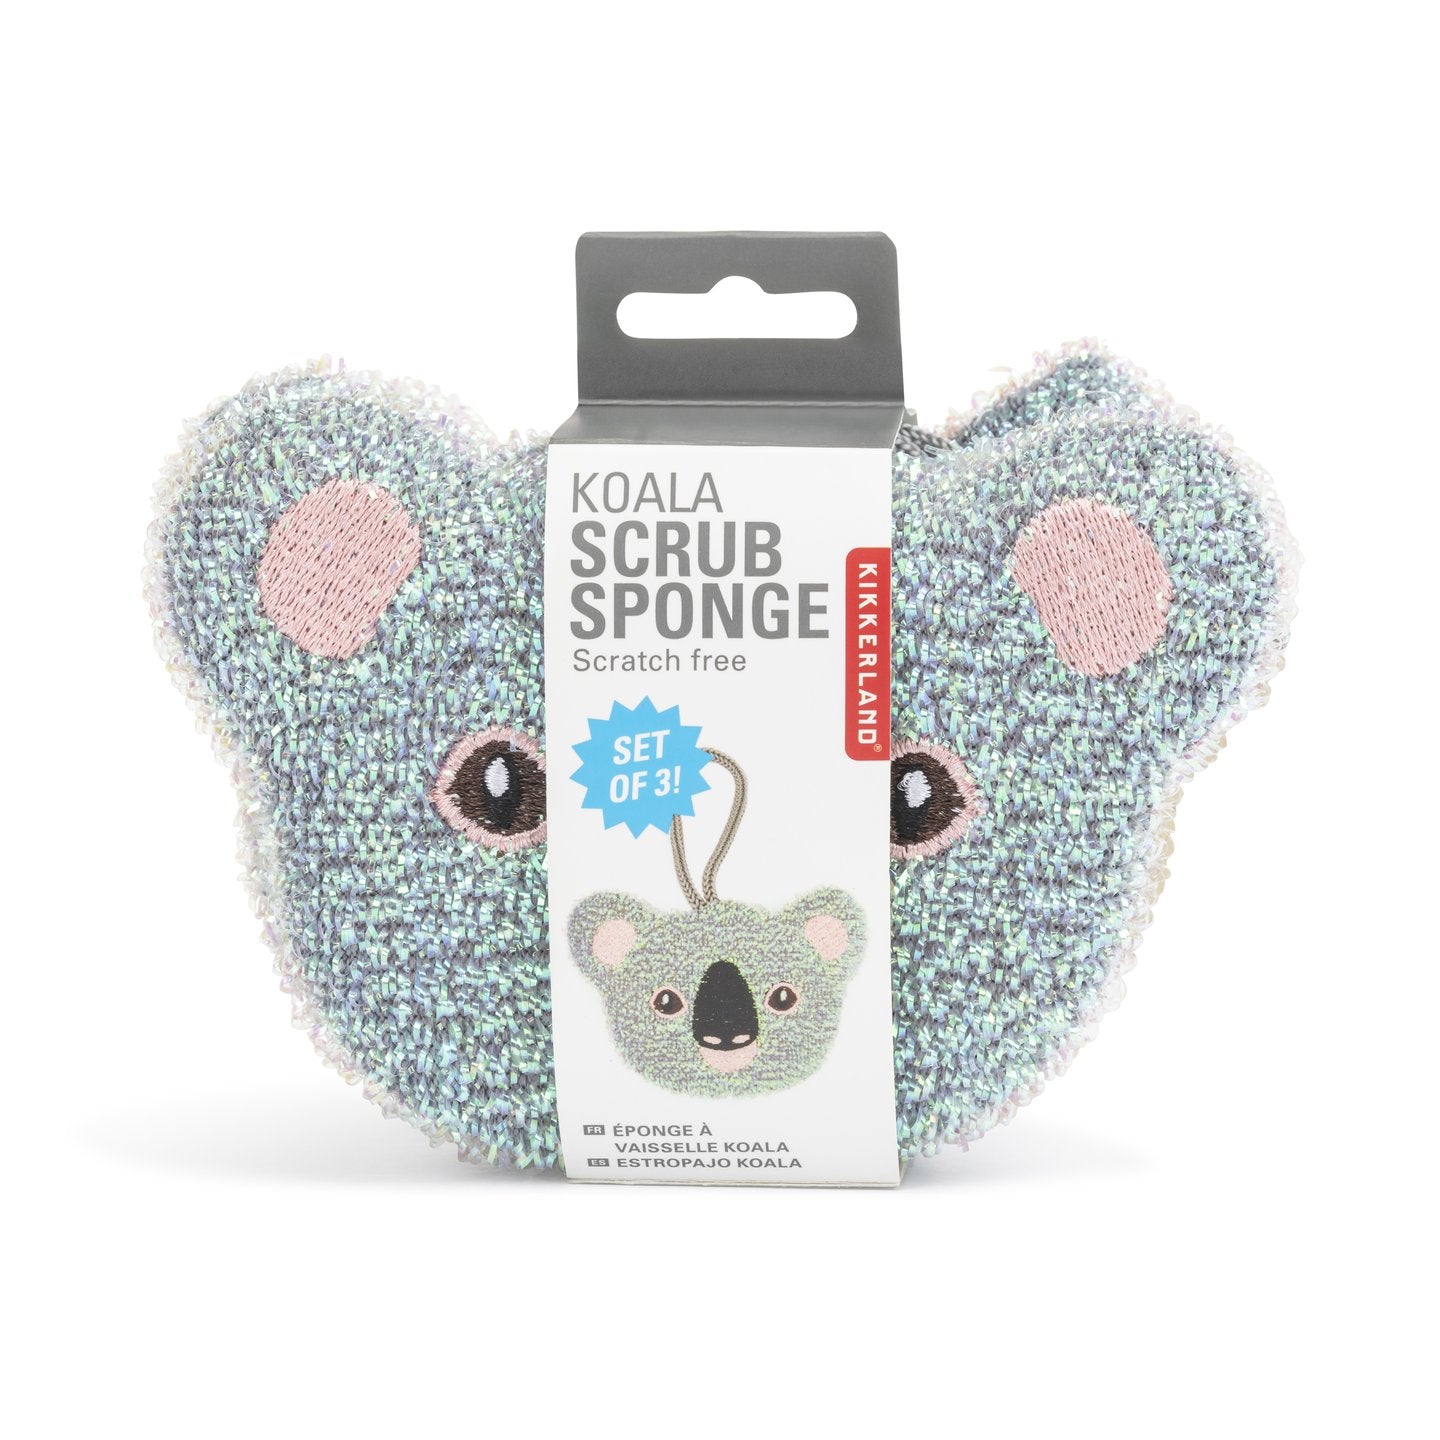 Scrub Sponge : Koala set of 3 Kikkerland - Oscar & Libby's